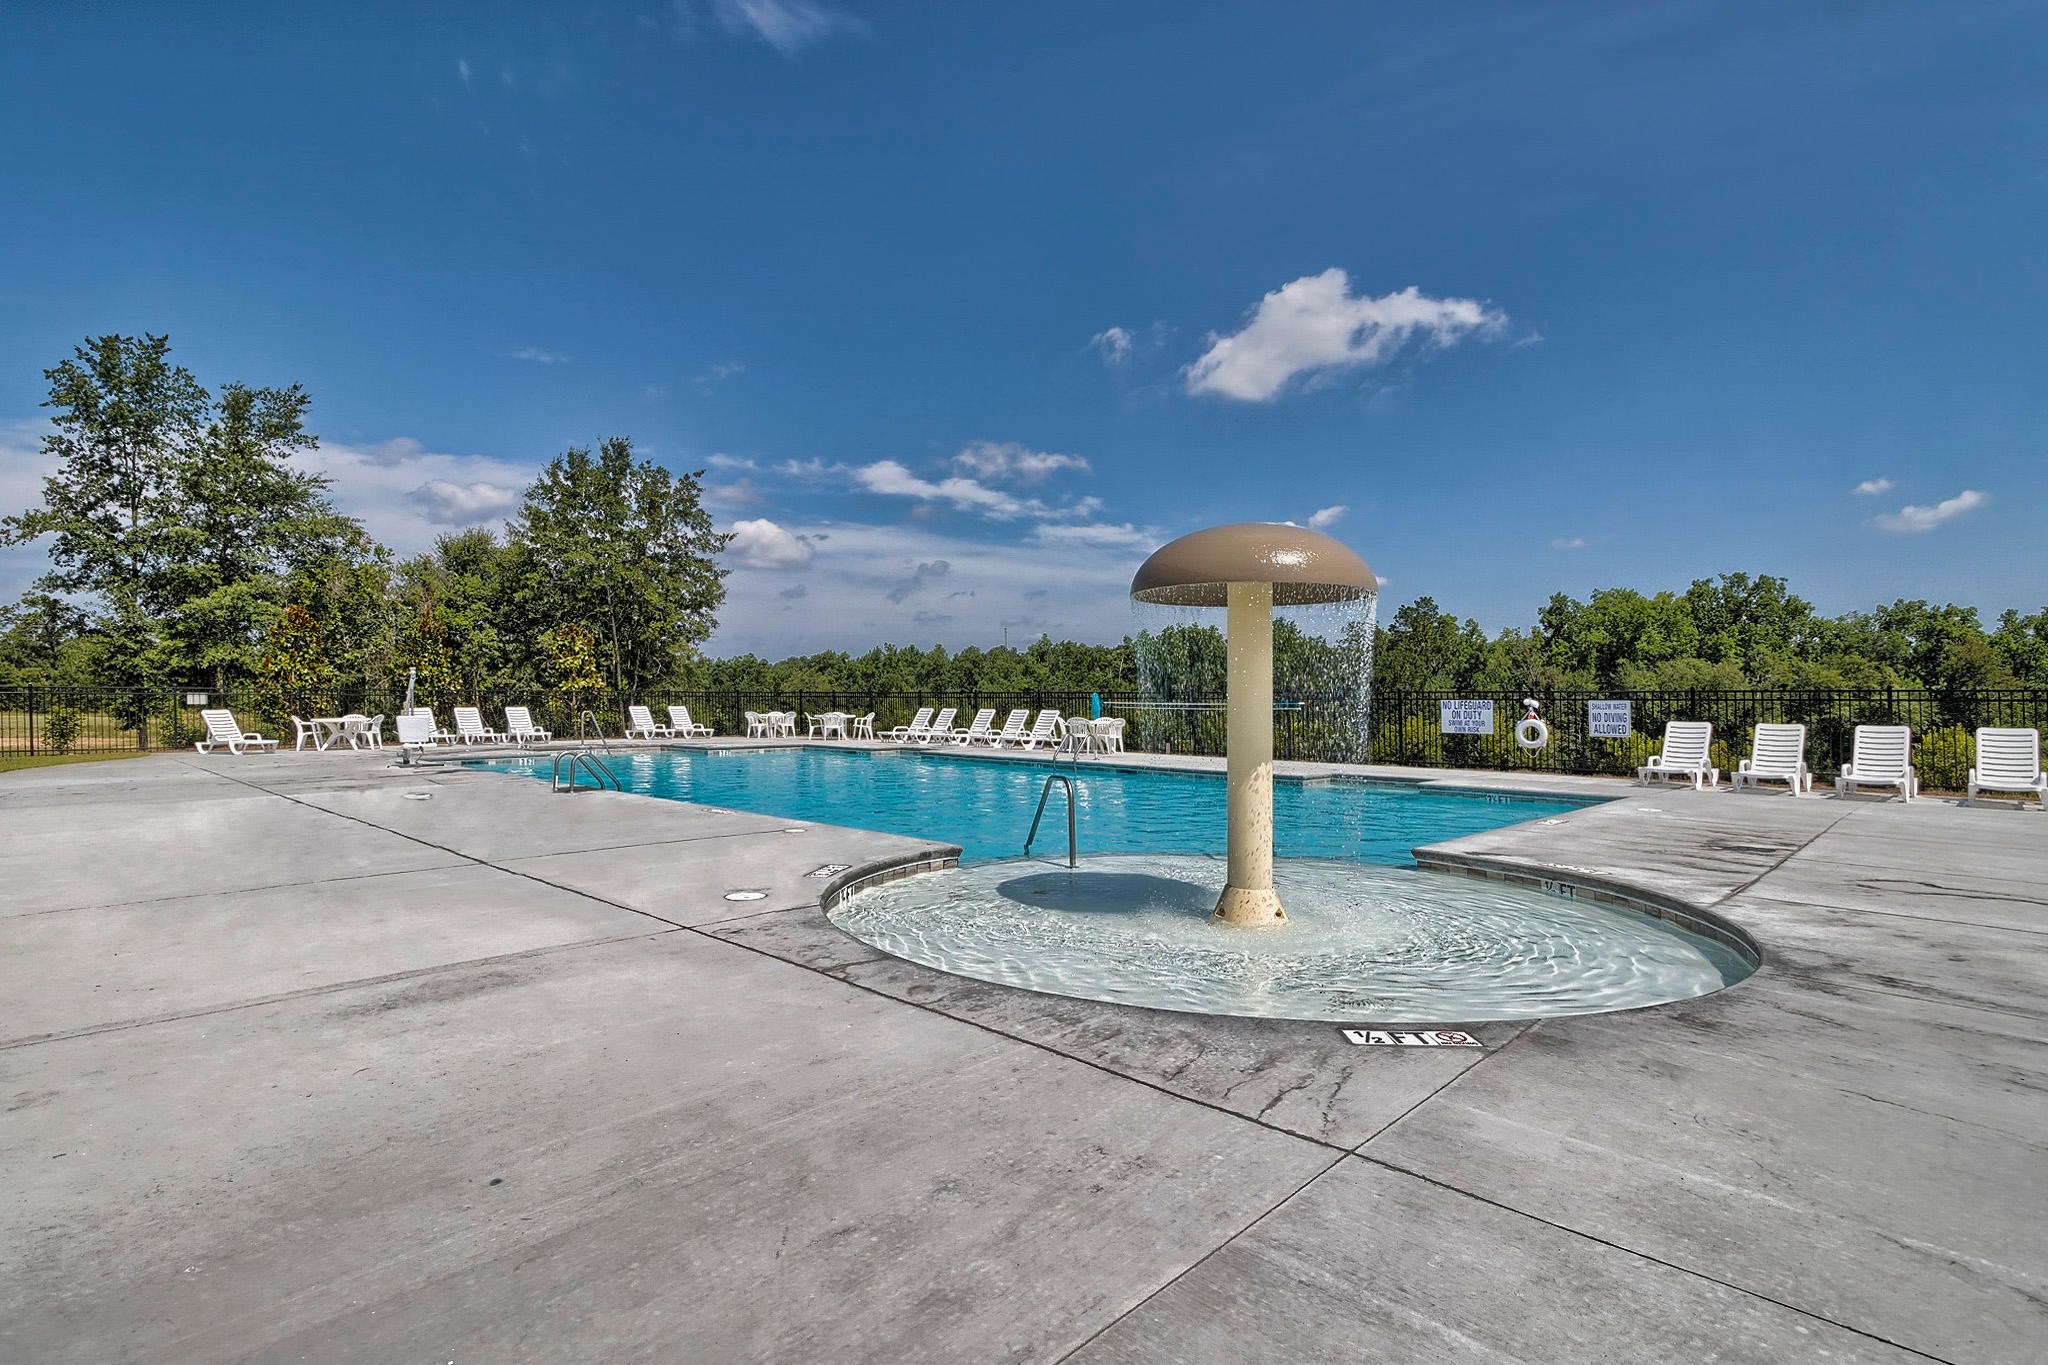 The Remmington - Amenity Center Pool